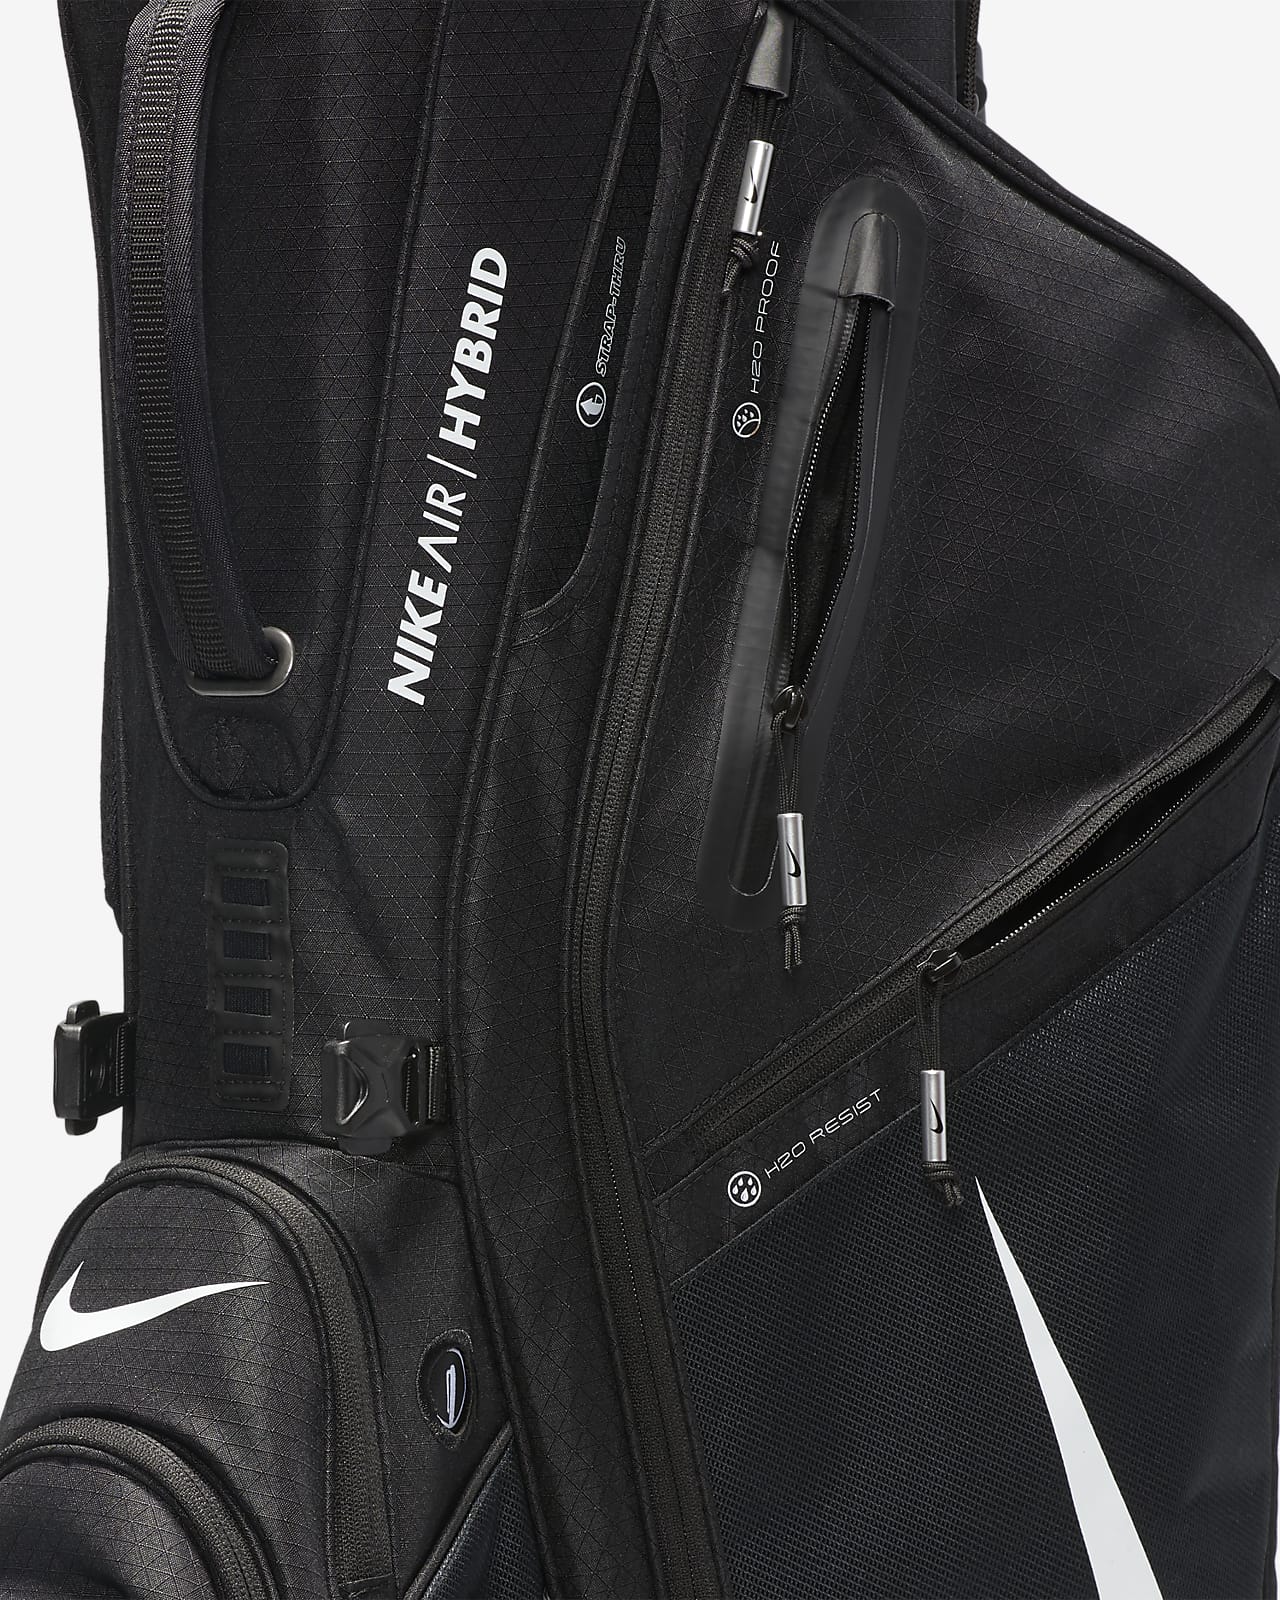 Nike Asia Cart Golf Bag Black x Metallic Silver Polyester, faux leather  GF3006 | eBay